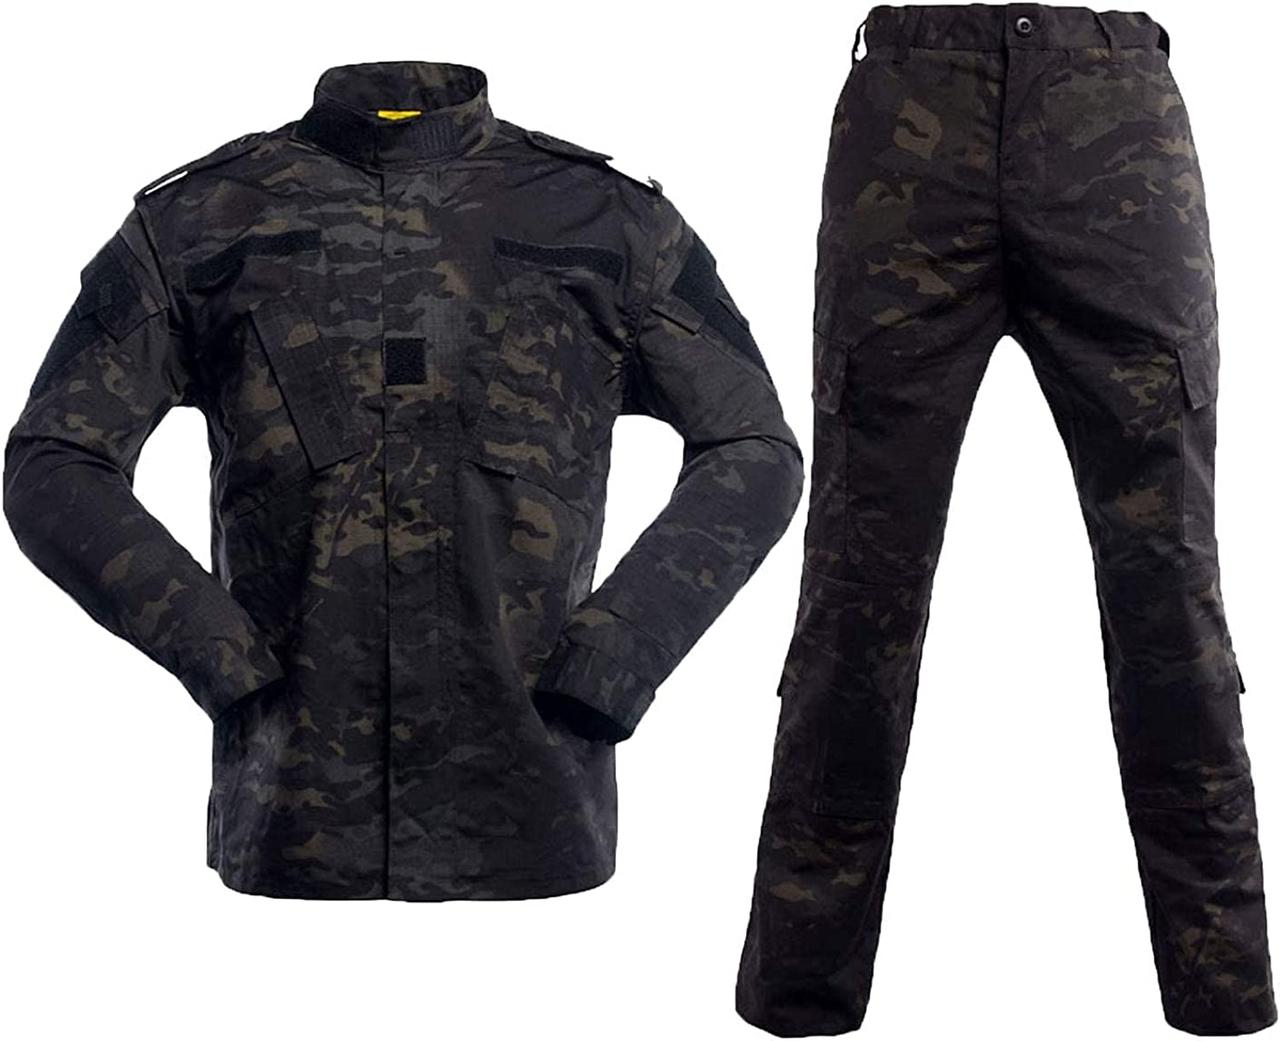 LANBAOSI Men's Tactical Jacket and Pants Military Camo Hunting ACU Uniform 2PC Set Army Multicam Apparel